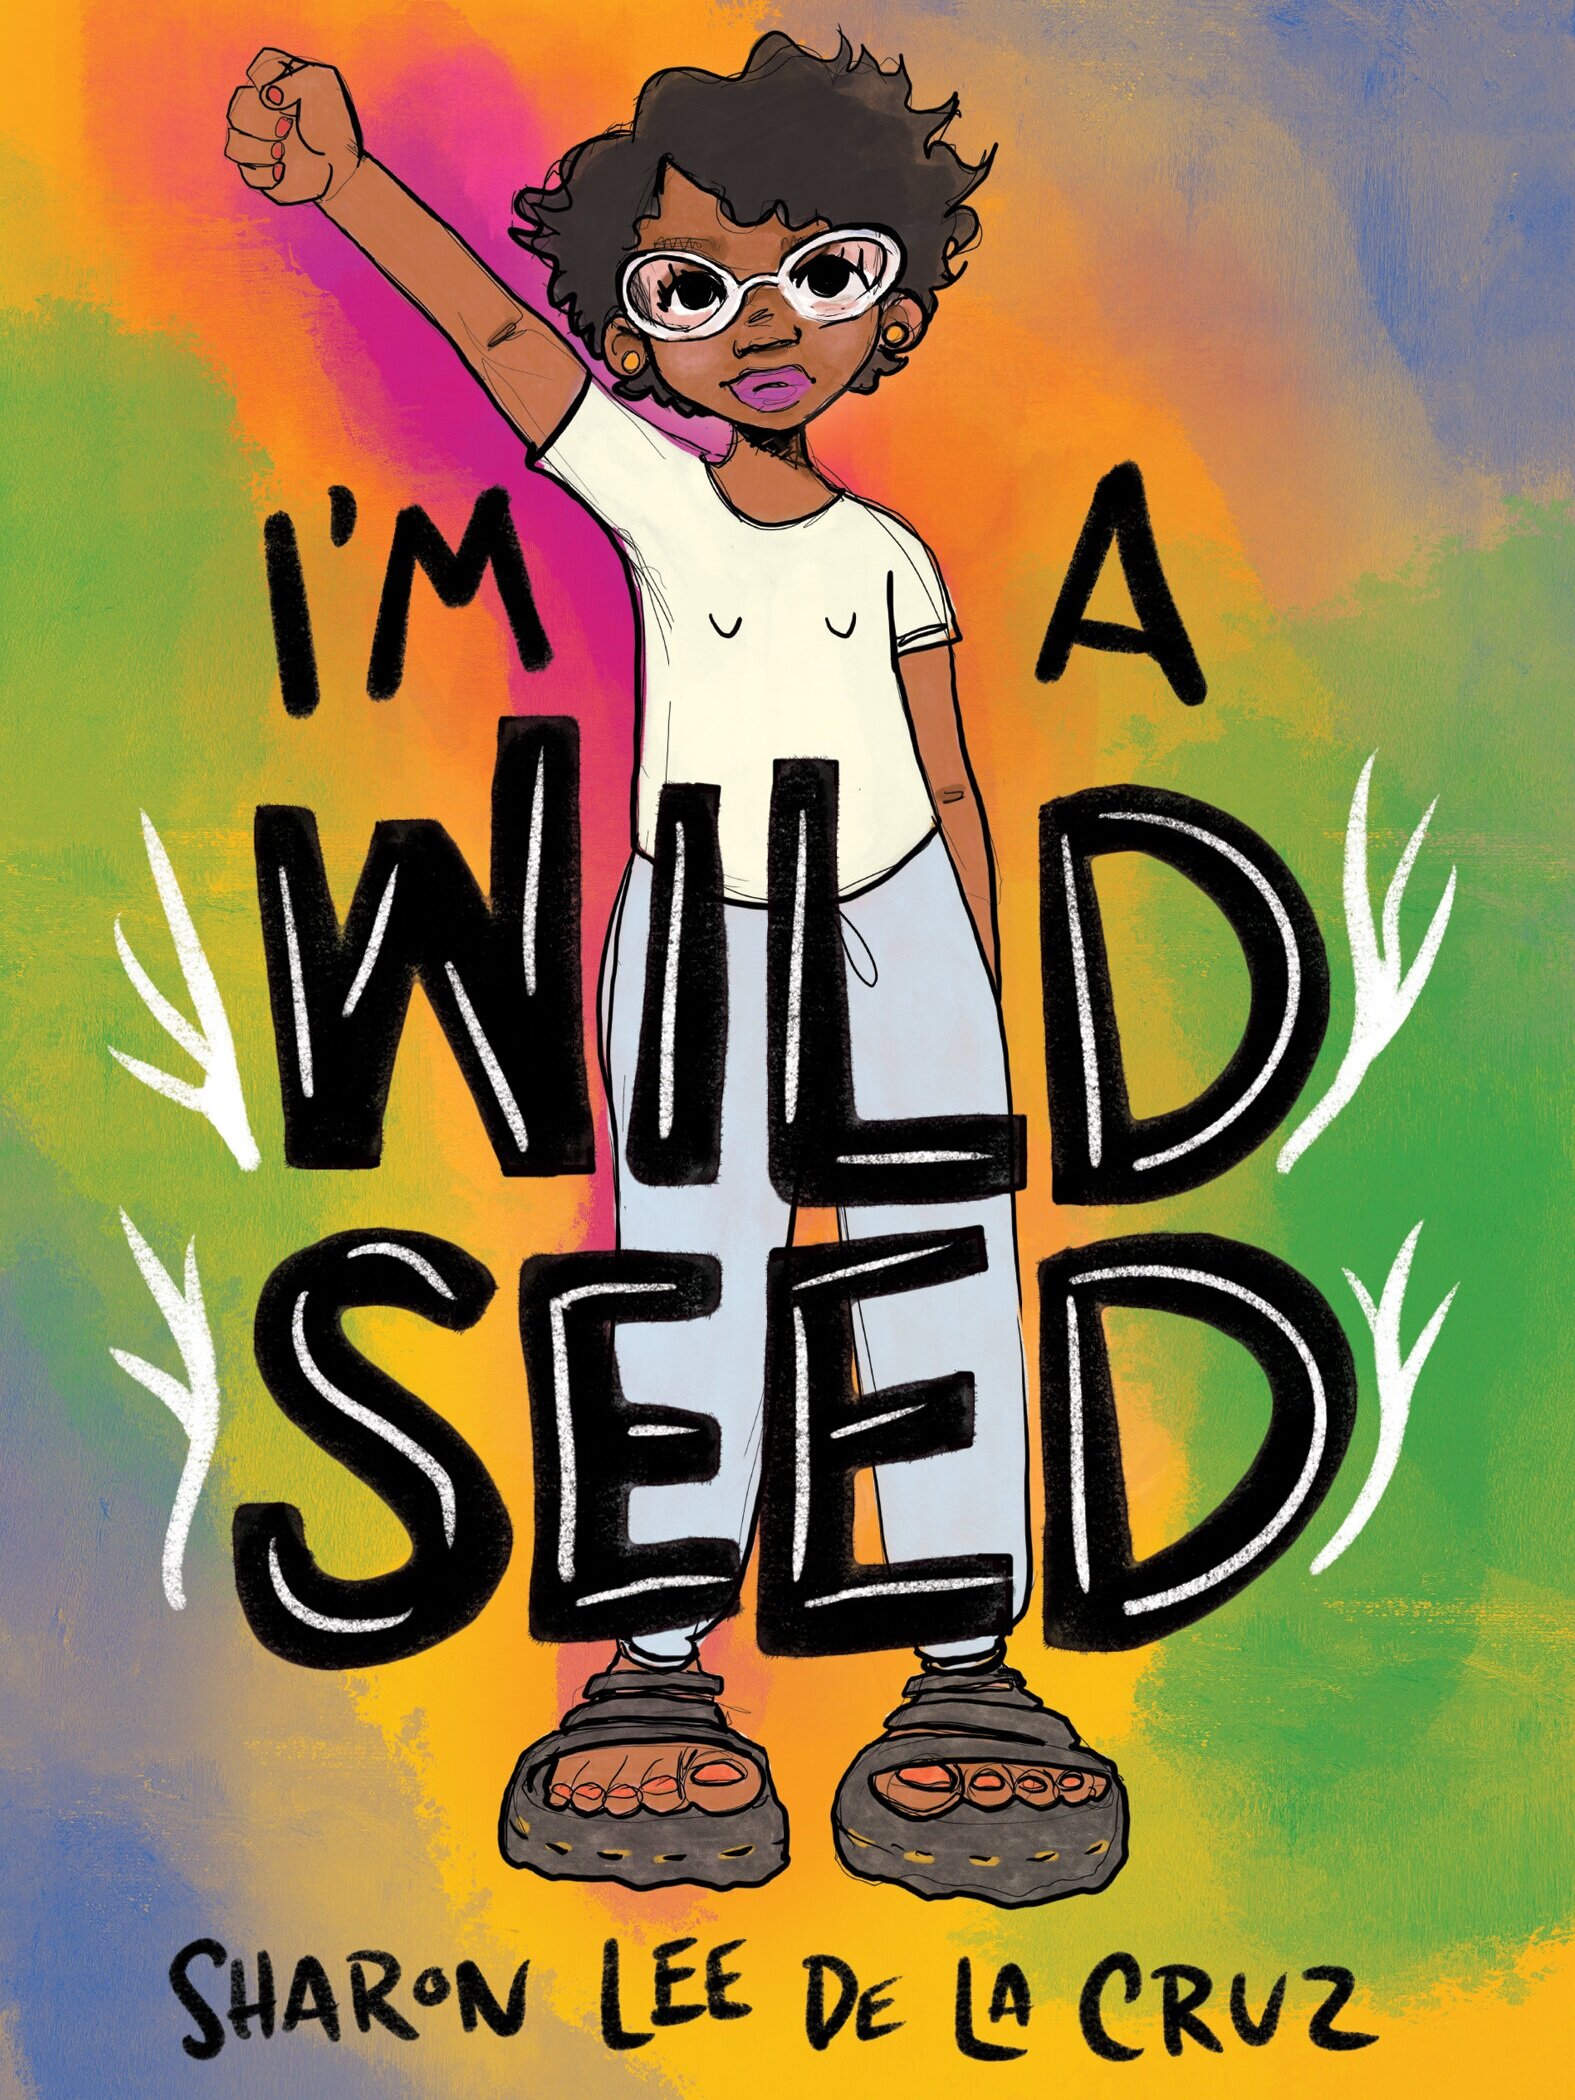 I'm a Wild Seed (April 2021, Street Noise books)